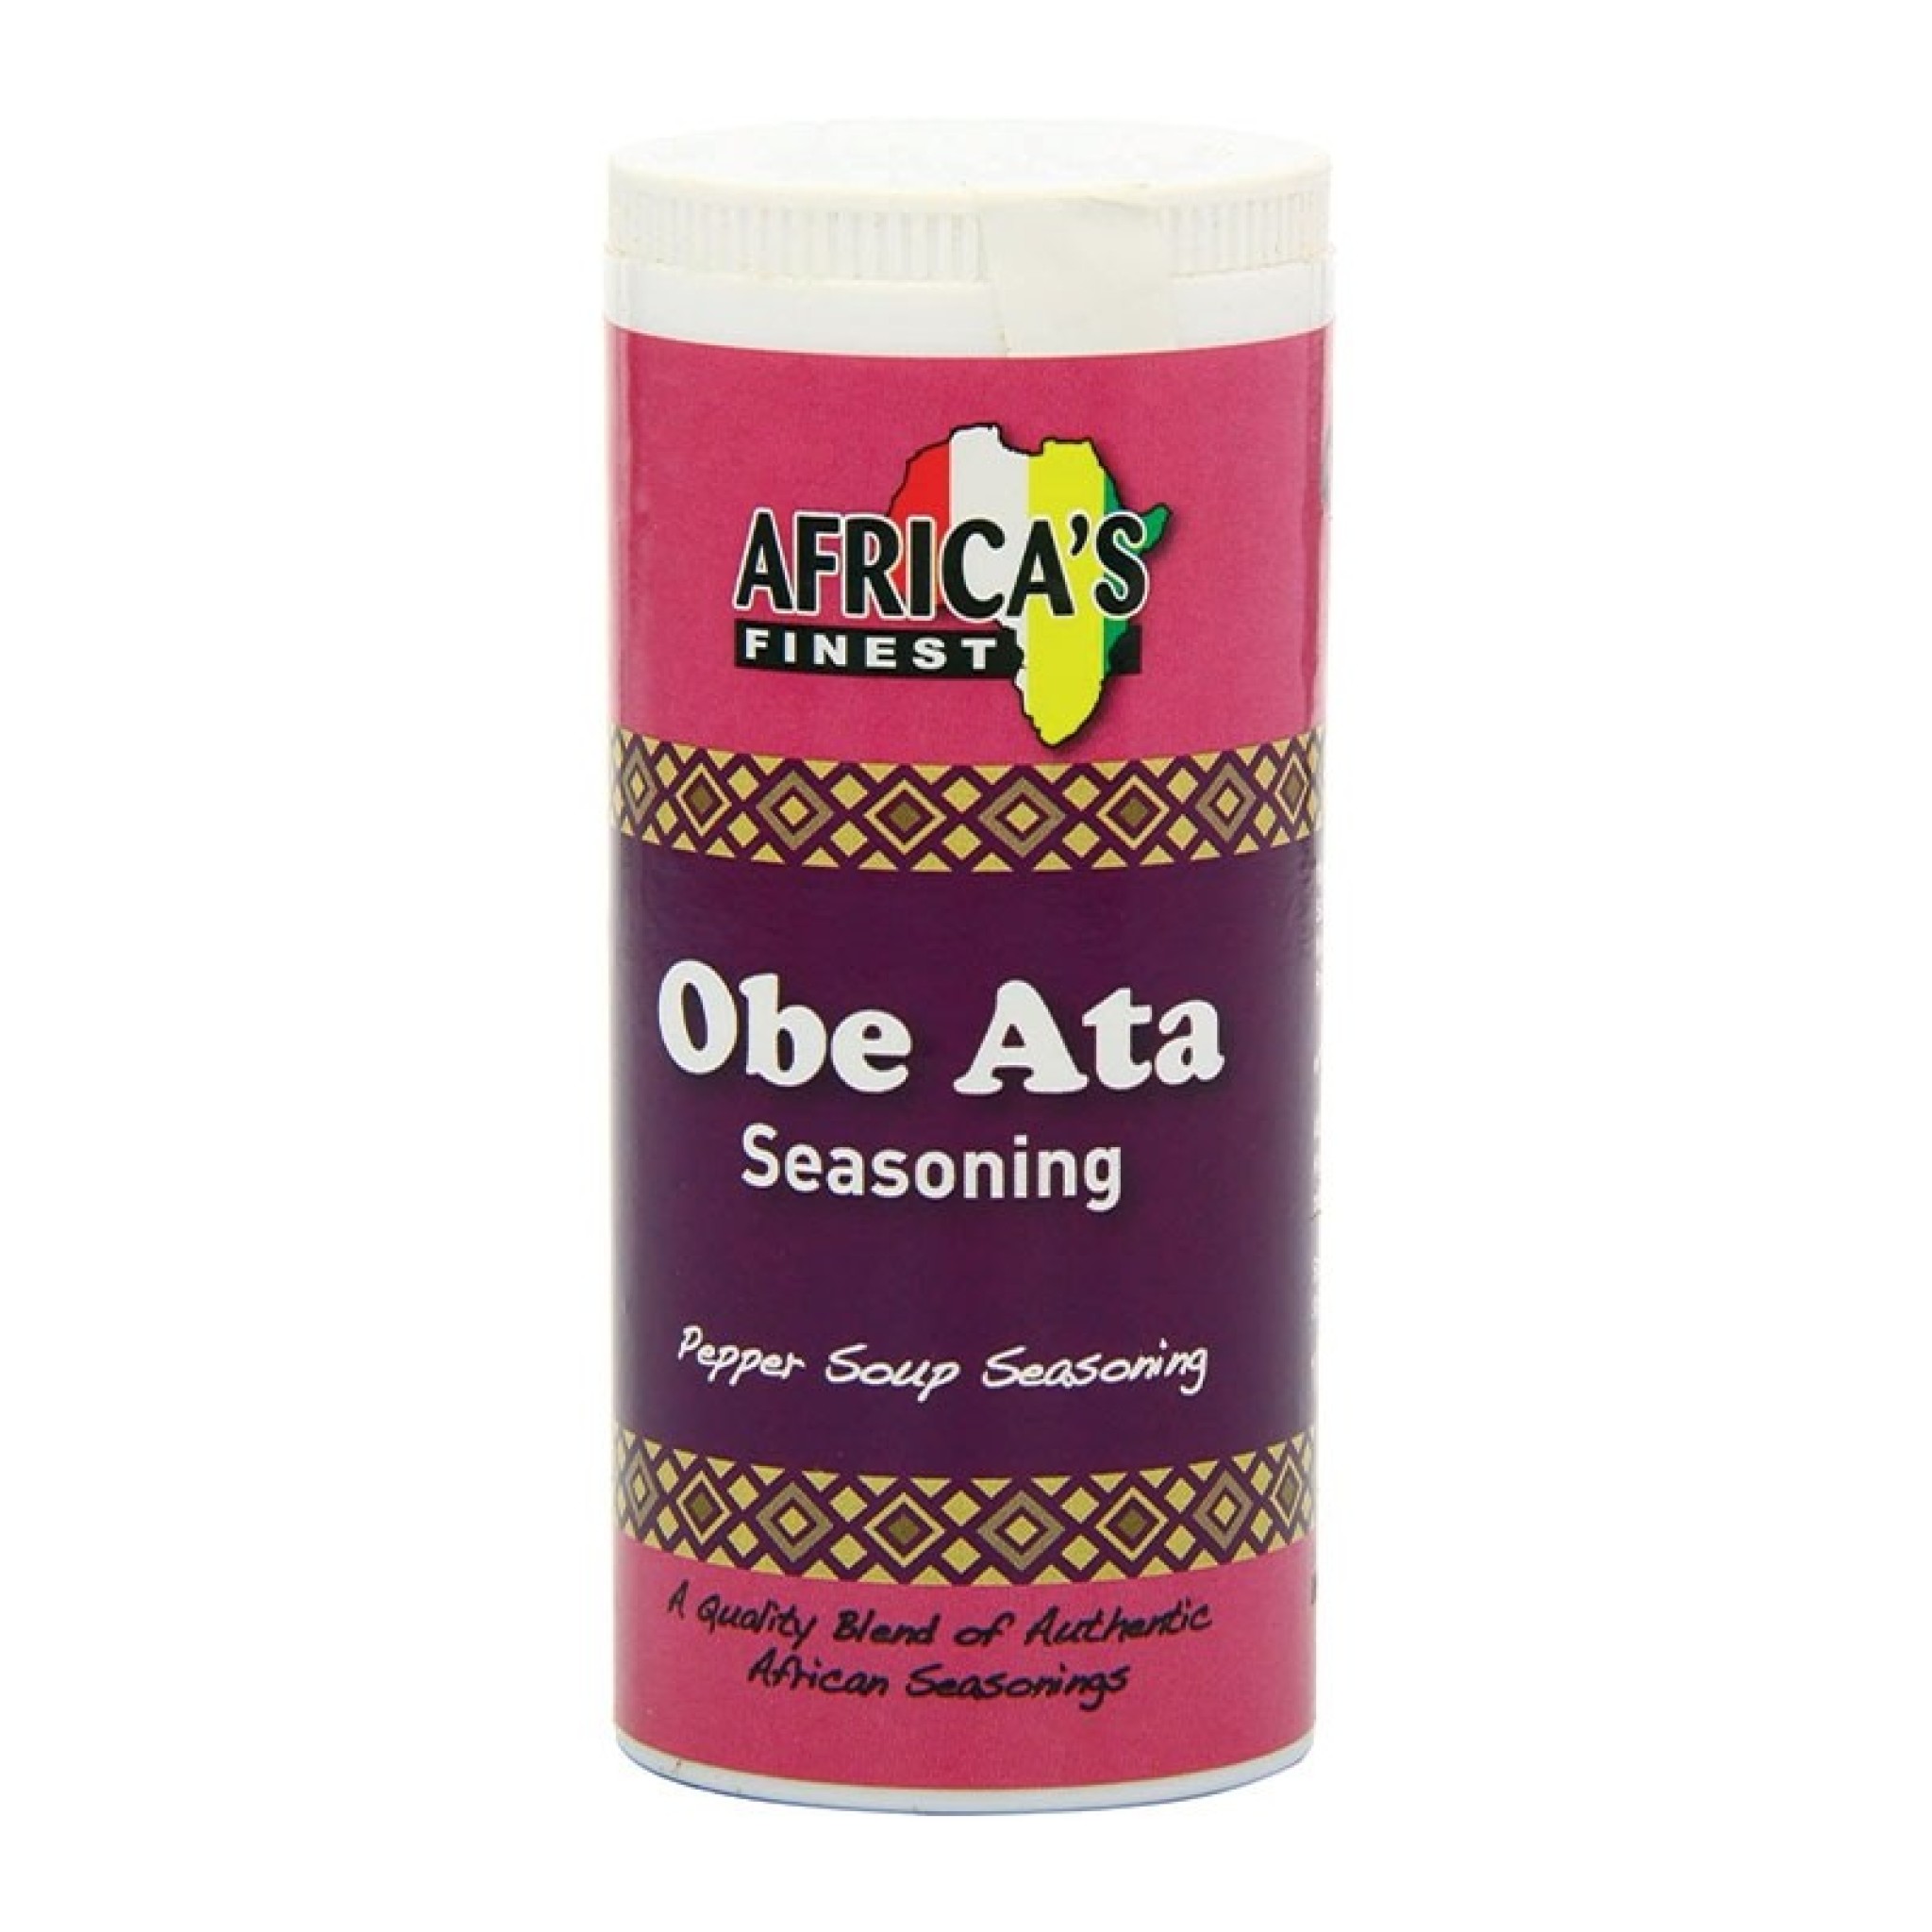 africa_s-finest-obe-ata-seasoning-100g.jpg